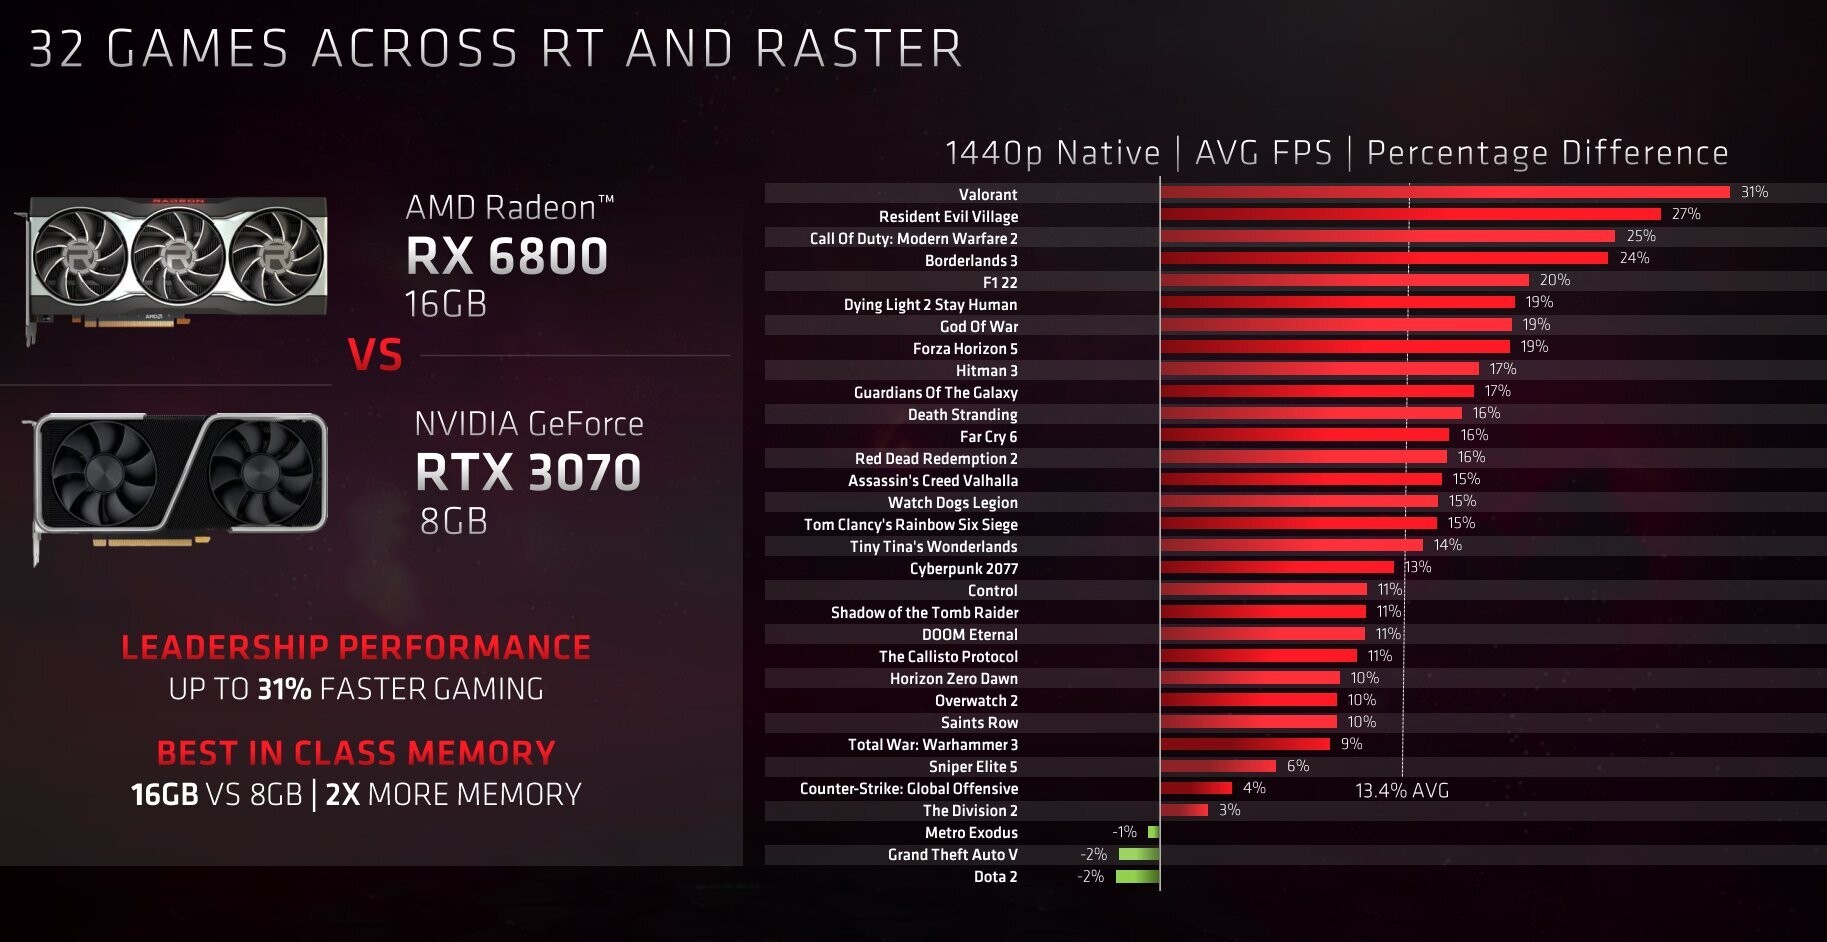 RTX 3070 Ti vs RX 6800 XT, Test in 13 Games